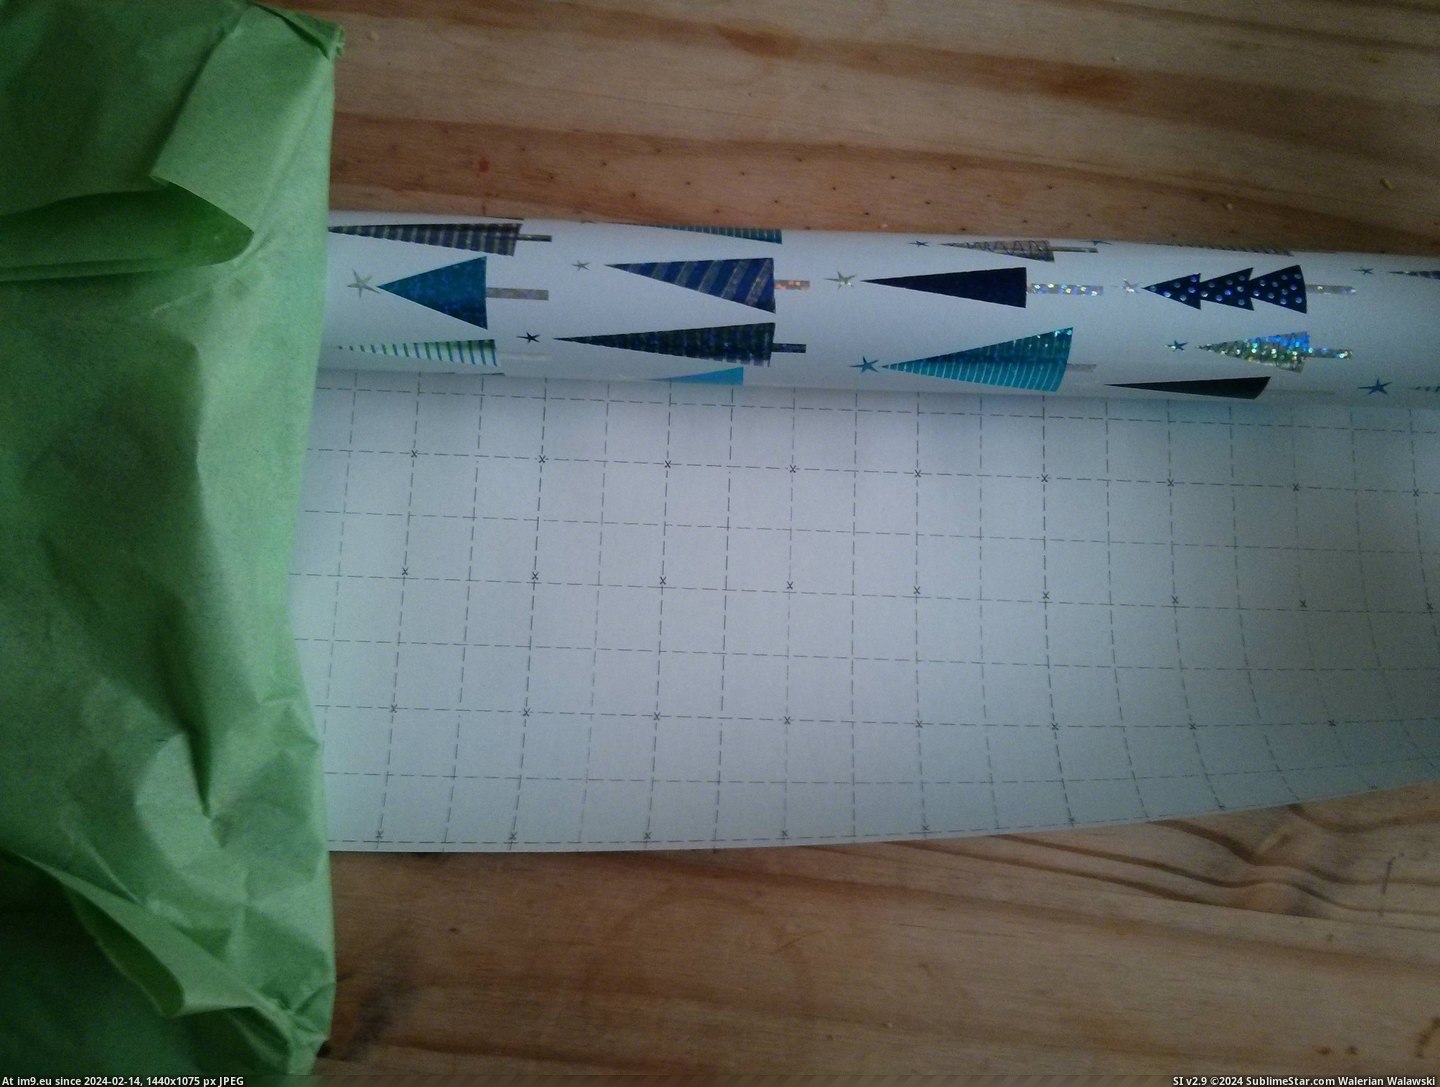 #Christmas #Lines #Wrapping #Scissor #Guide #Paper [Mildlyinteresting] My Christmas wrapping paper has scissor guide lines Pic. (Bild von album My r/MILDLYINTERESTING favs))